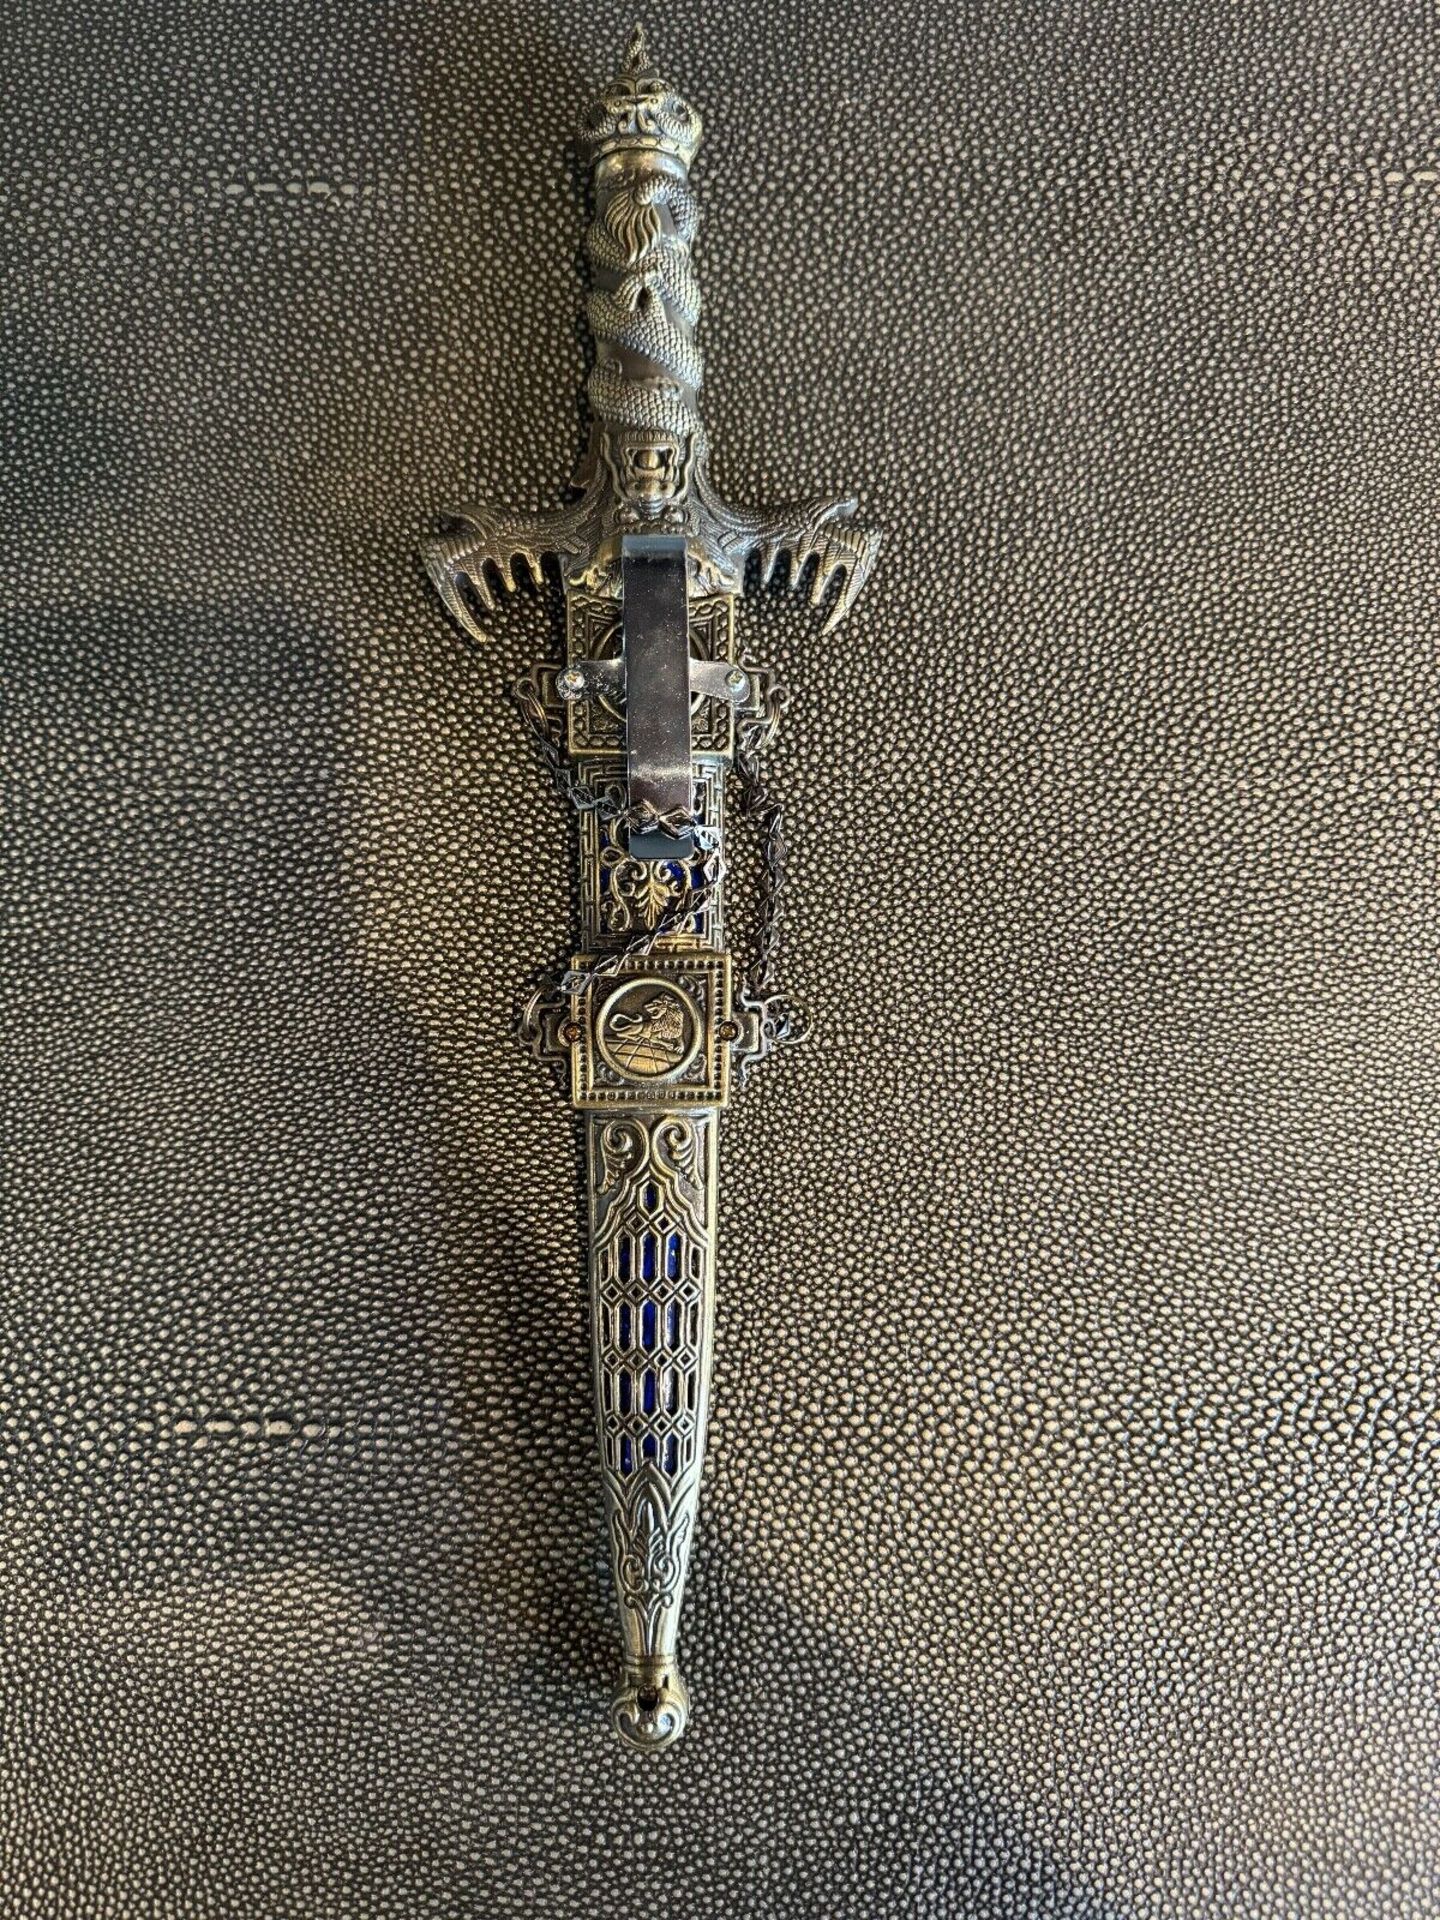 Metal Dagger detailed. Lion engraving handle + Metal Sheath W / belt clip + Lock - Image 3 of 6